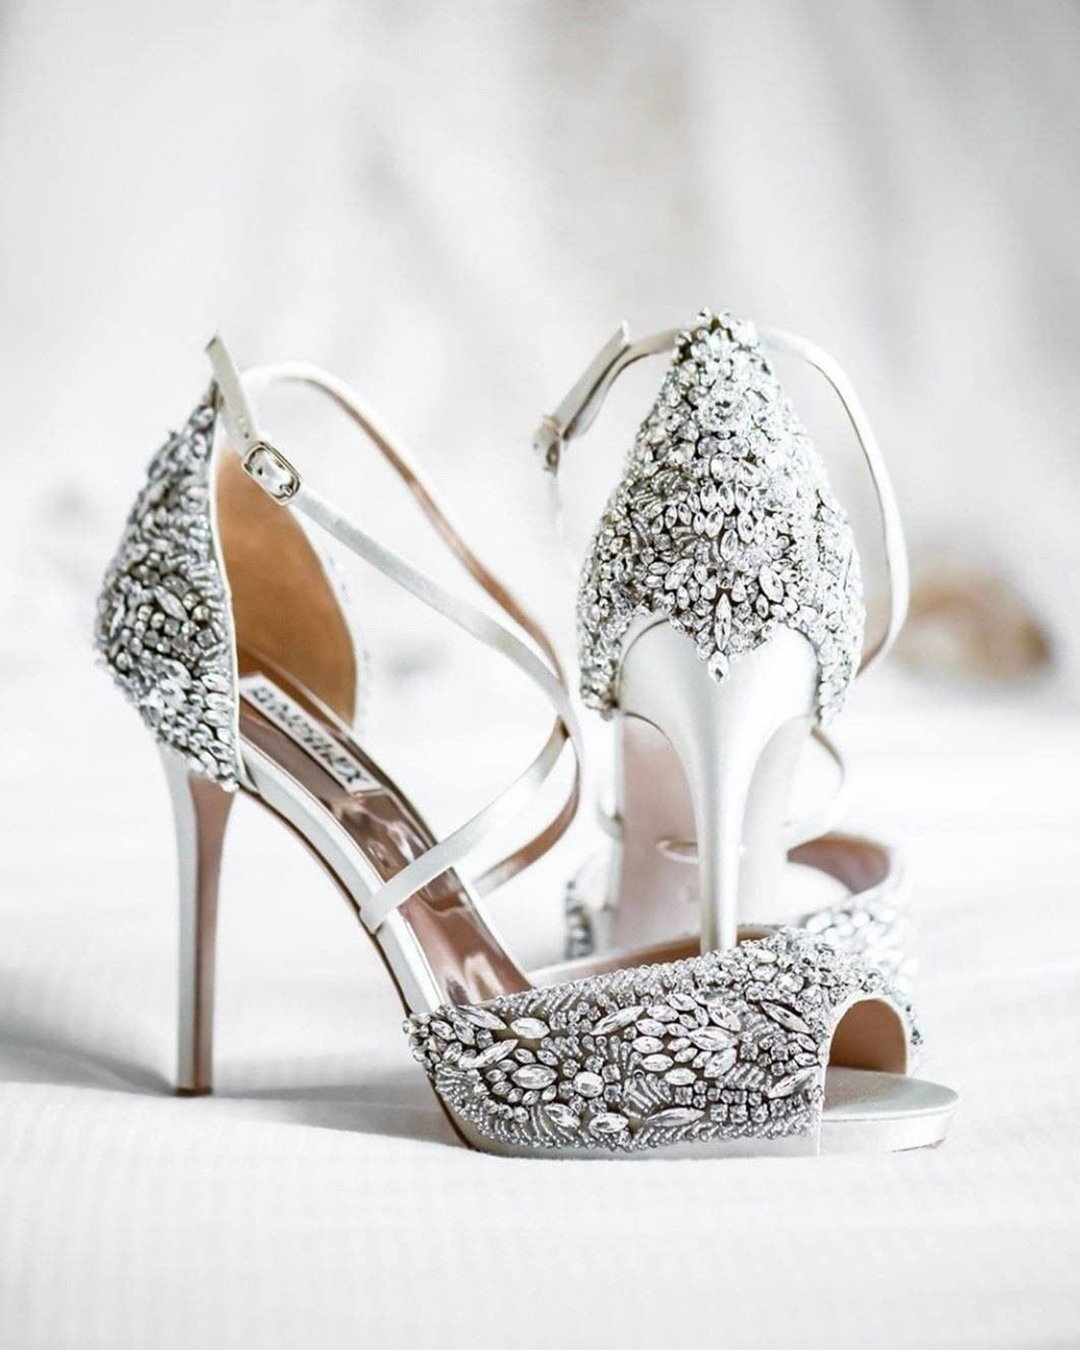 silver wedding shoes with heels stones badgley mishka